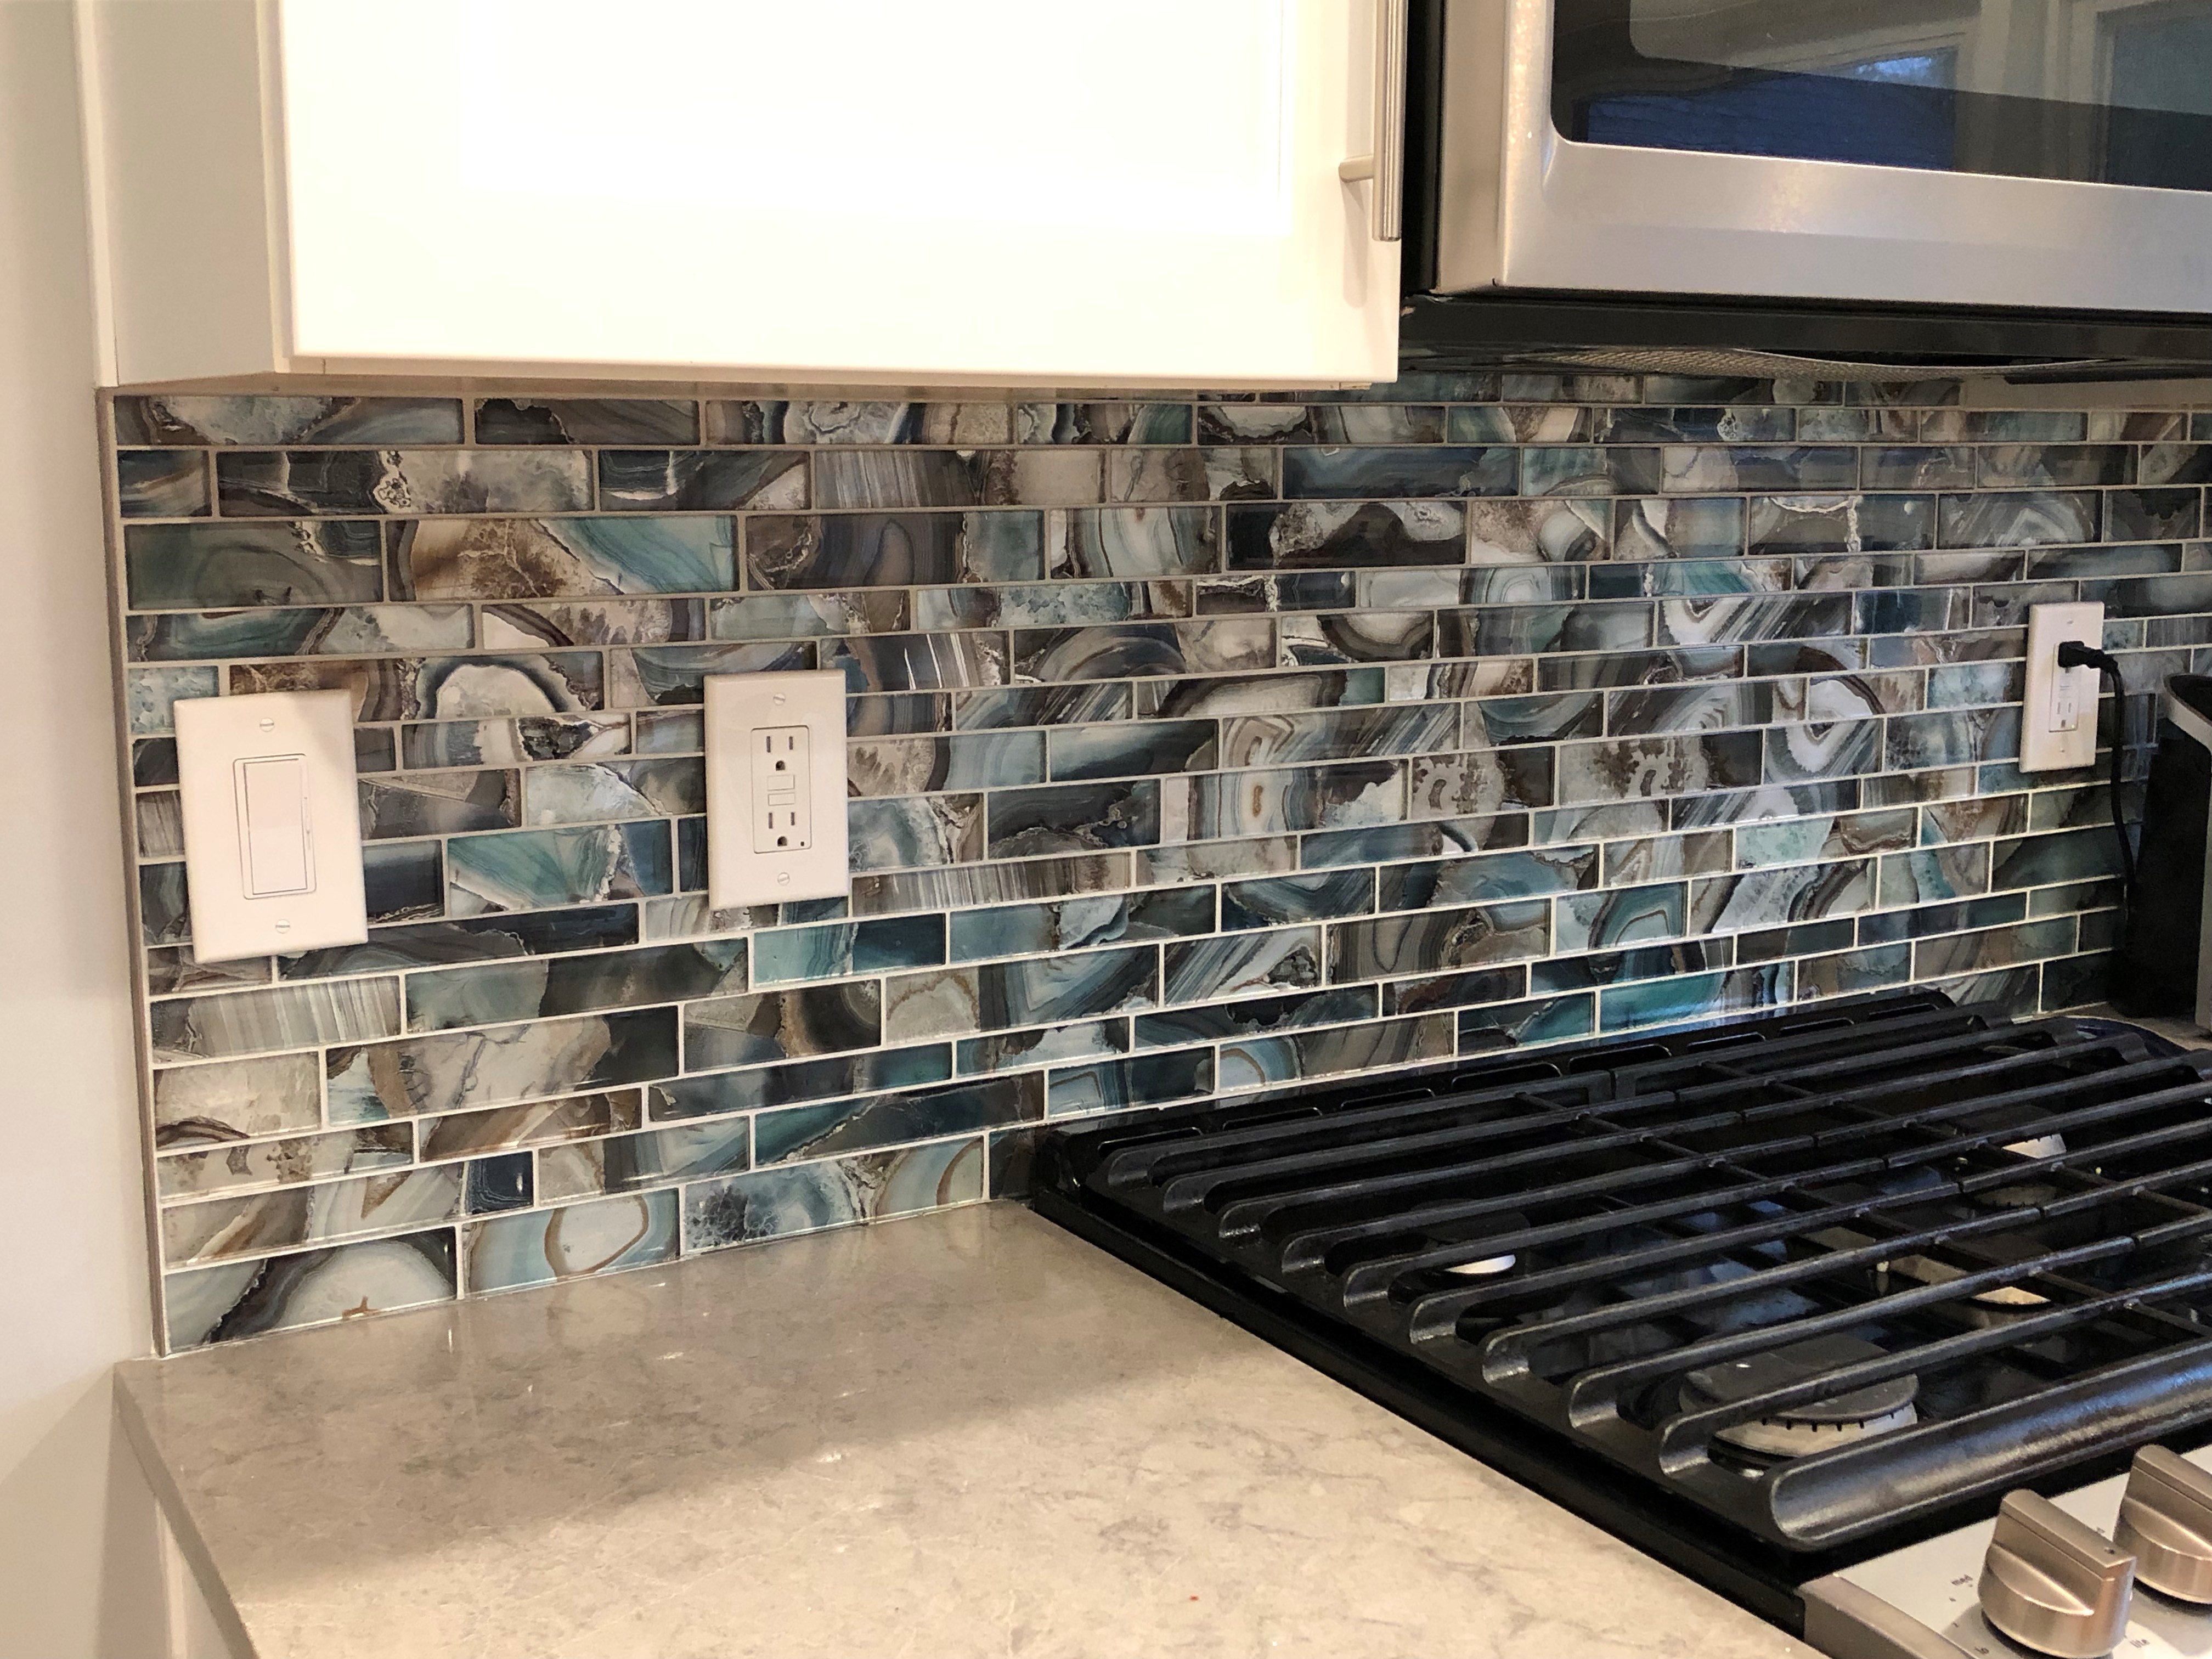 Choosing the perfect kitchen backsplash tile